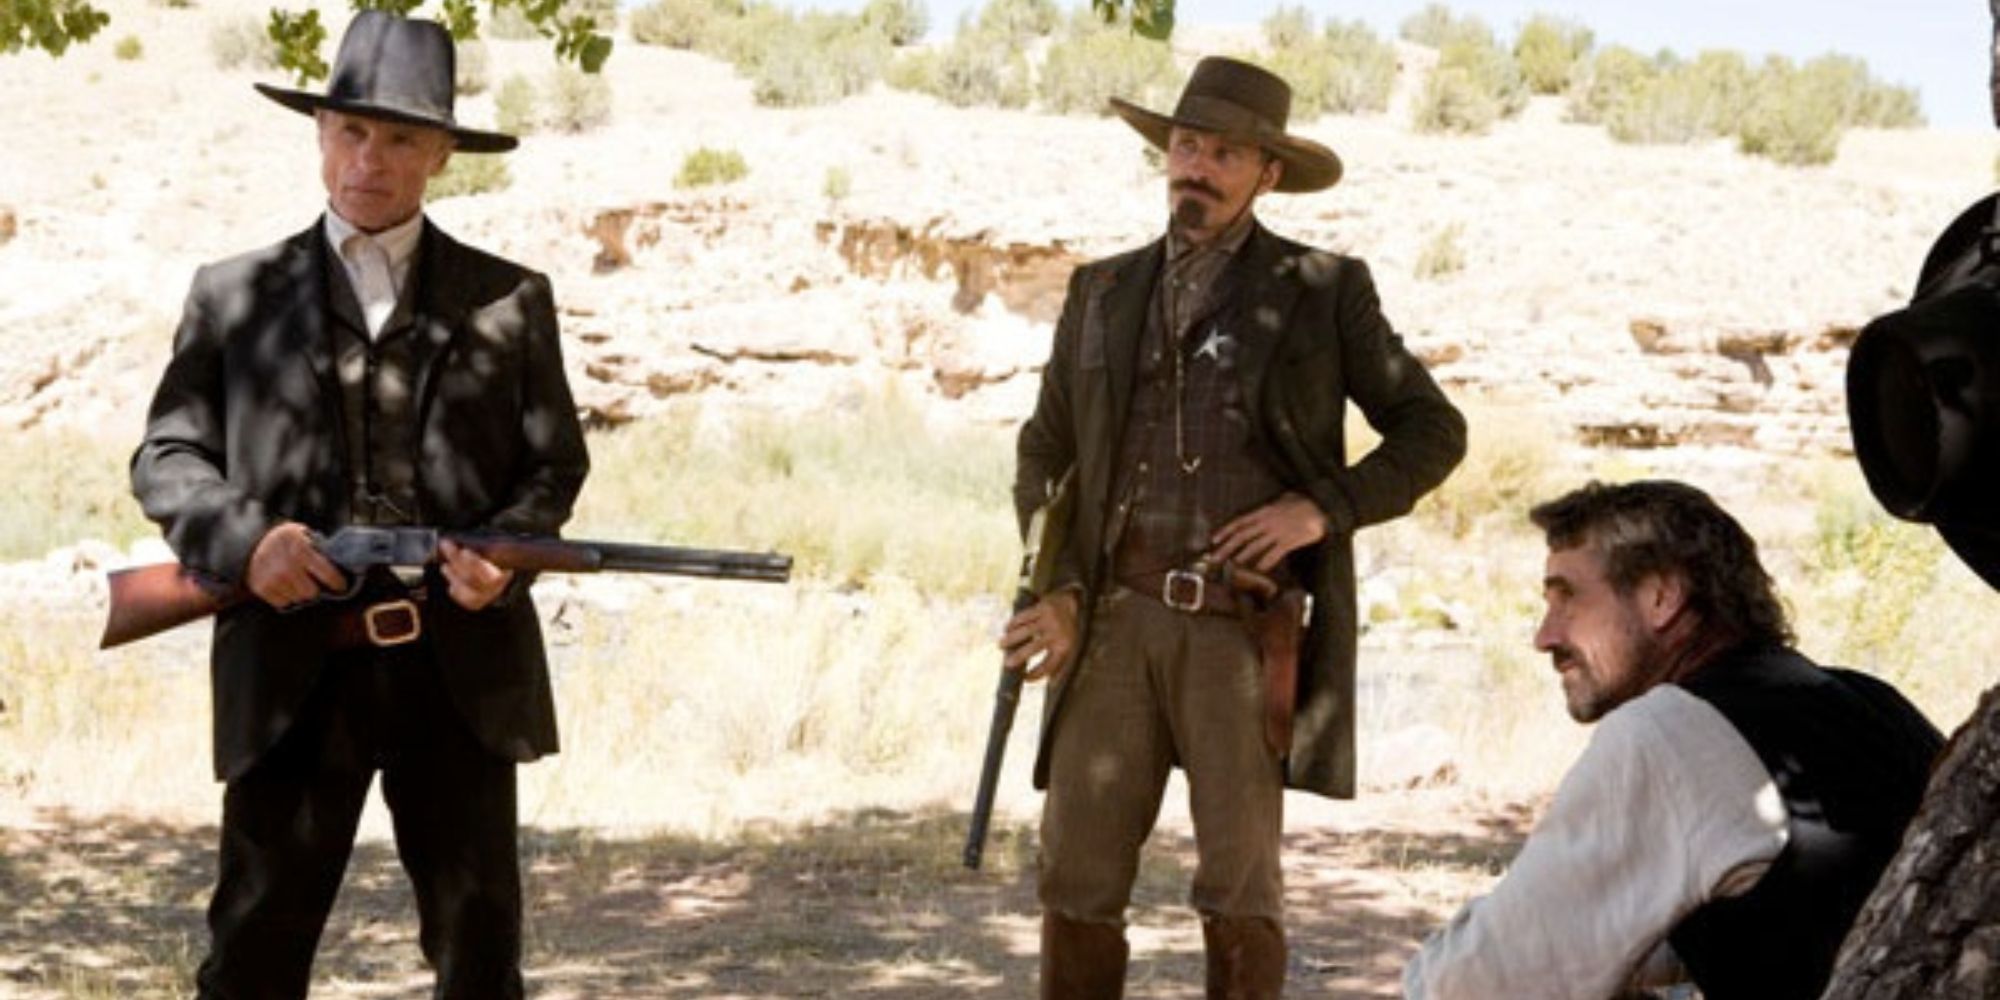 Ed Harris and Viggo Mortensen standing together in a desert in 'Appaloosa'